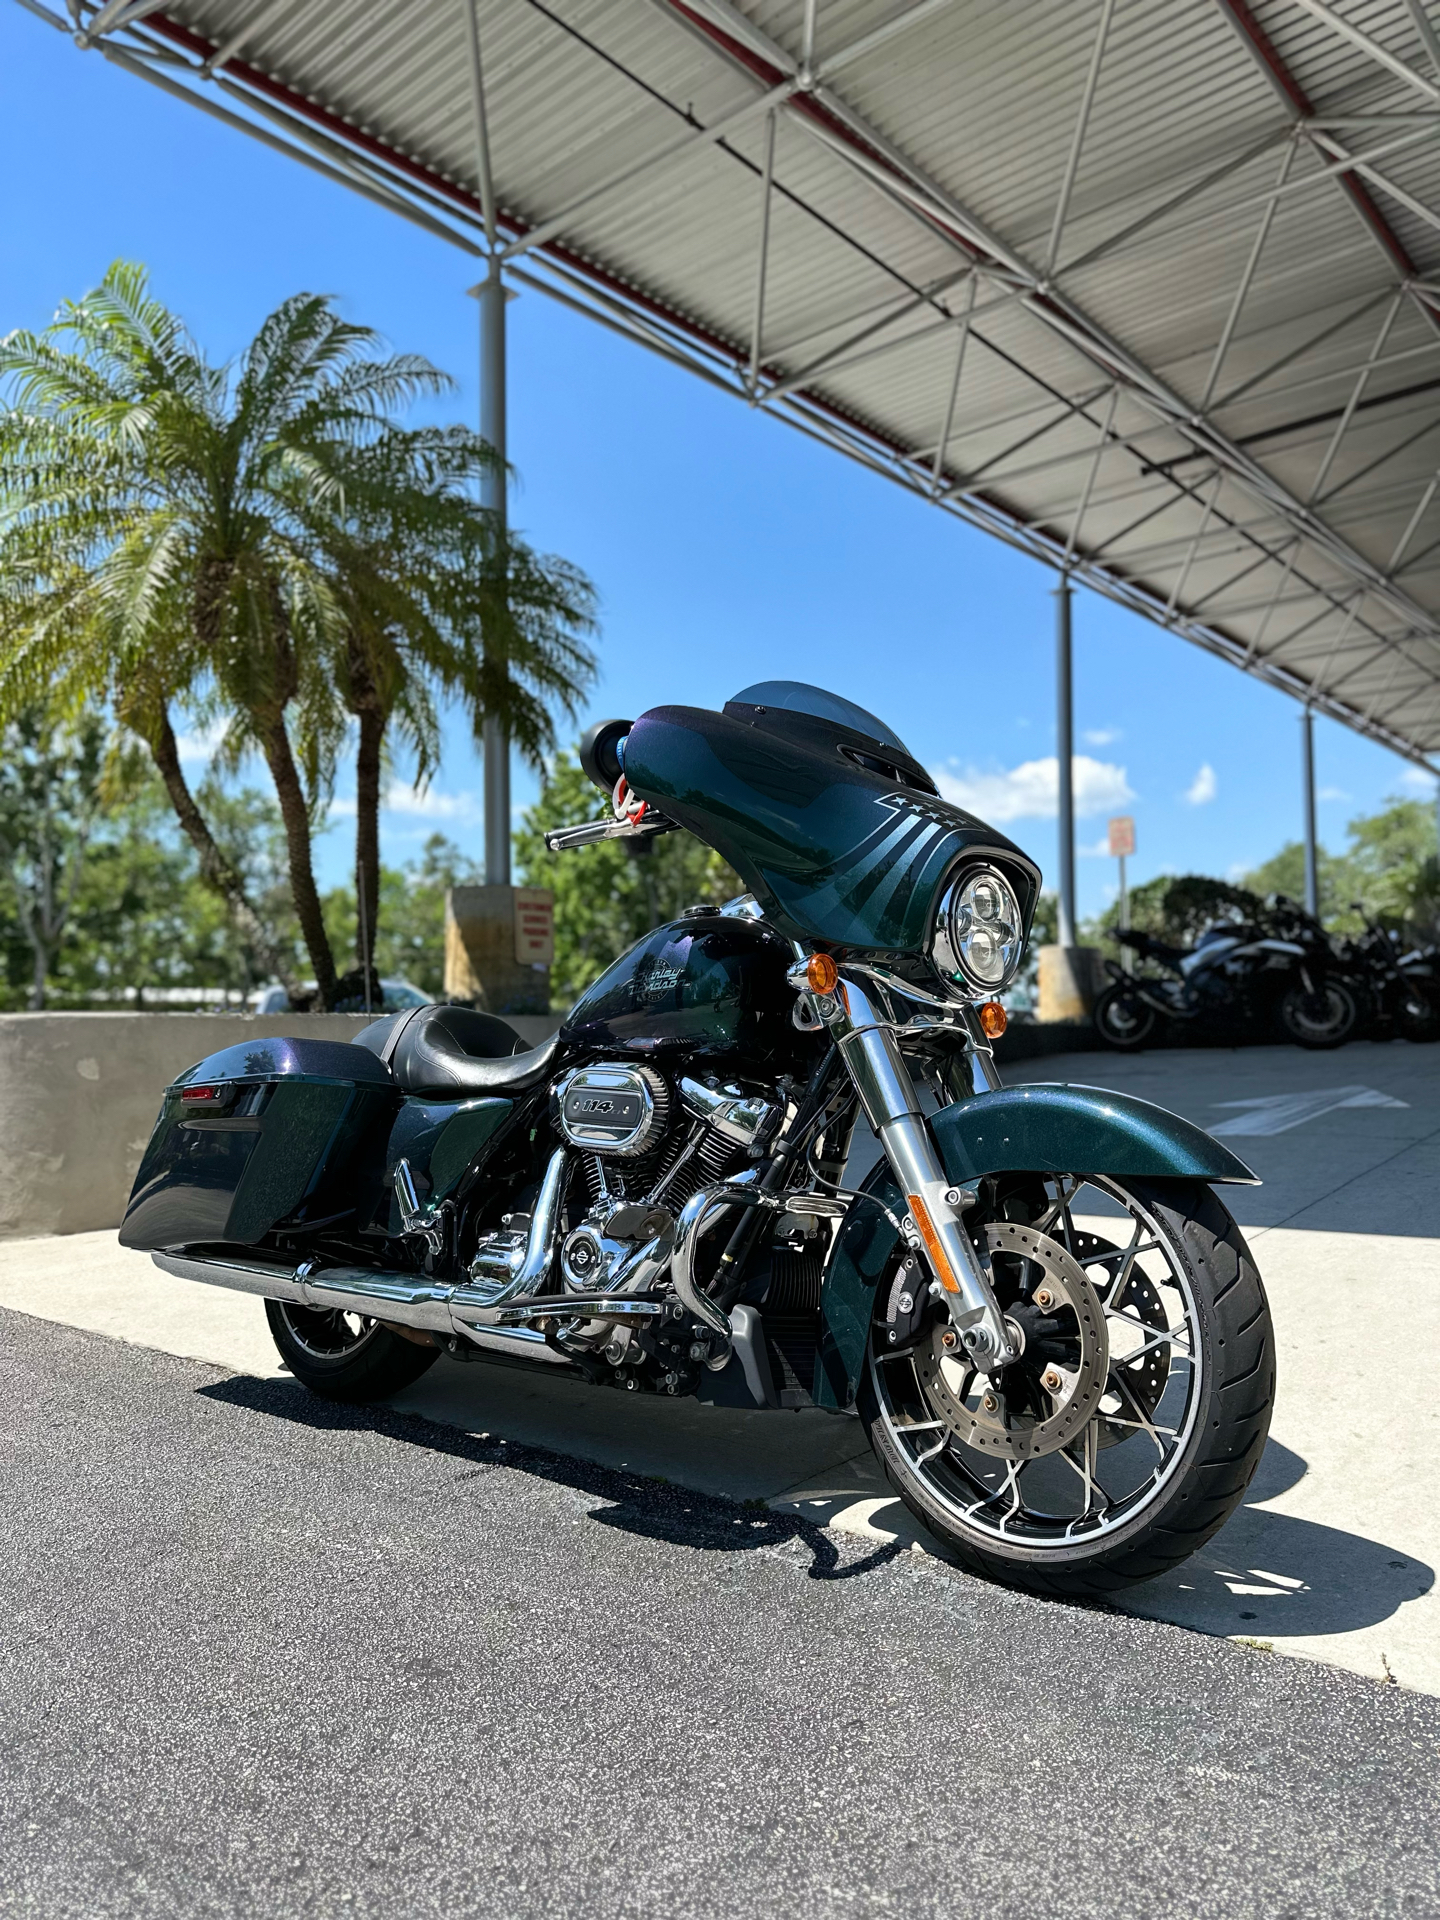 2021 Harley-Davidson Street Glide® Special in Sanford, Florida - Photo 2